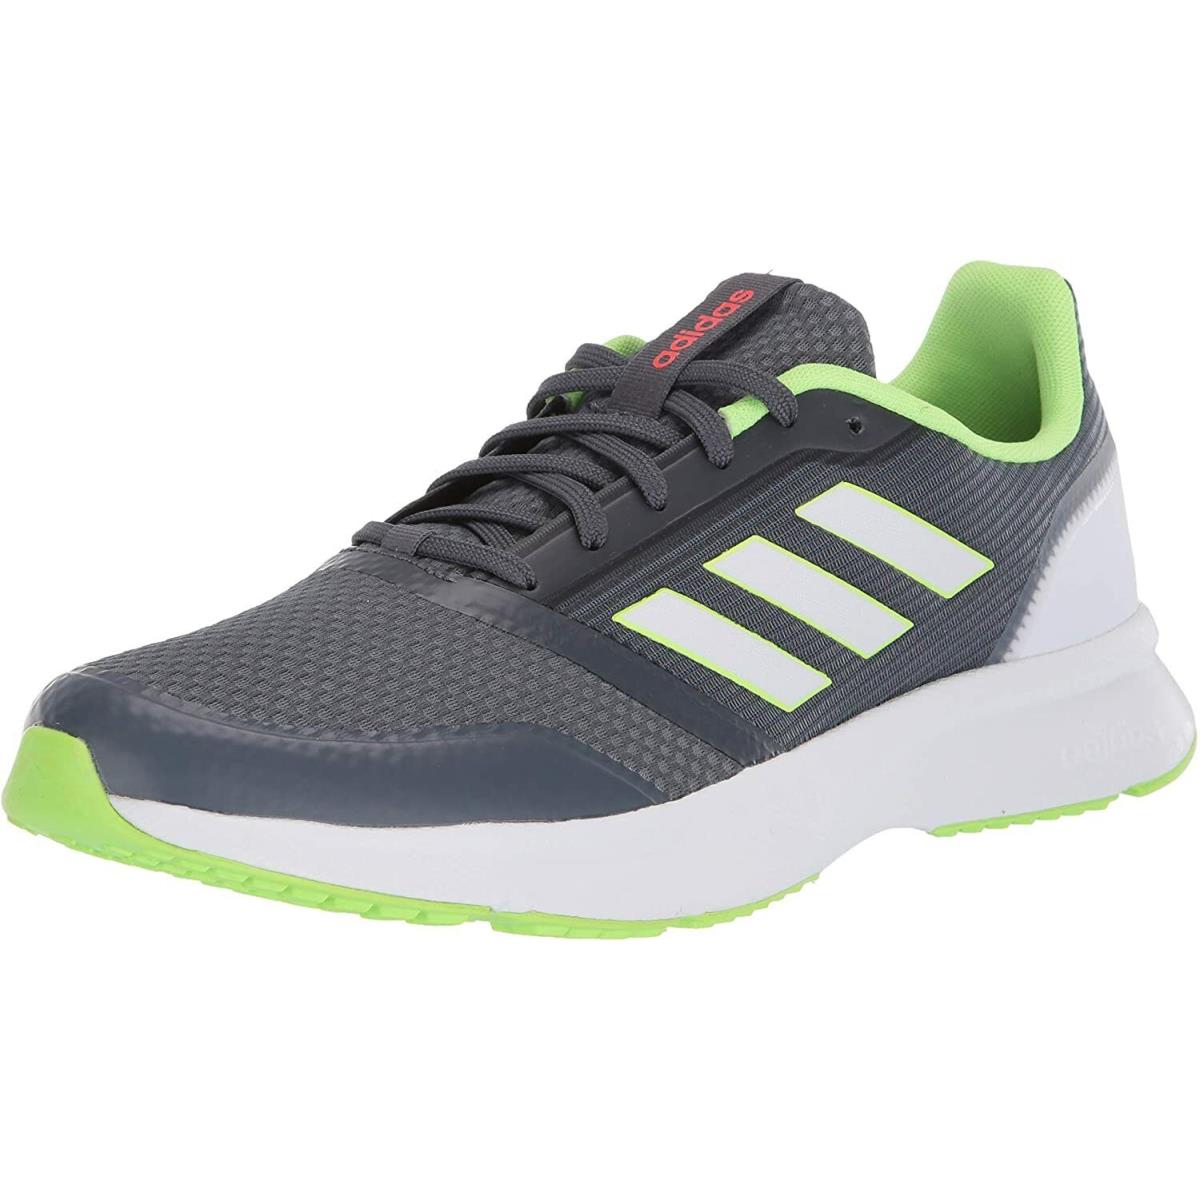 Adidas Mens Nova Flow Athletic Running Sneakers Shoes Grey/green US 9.5M